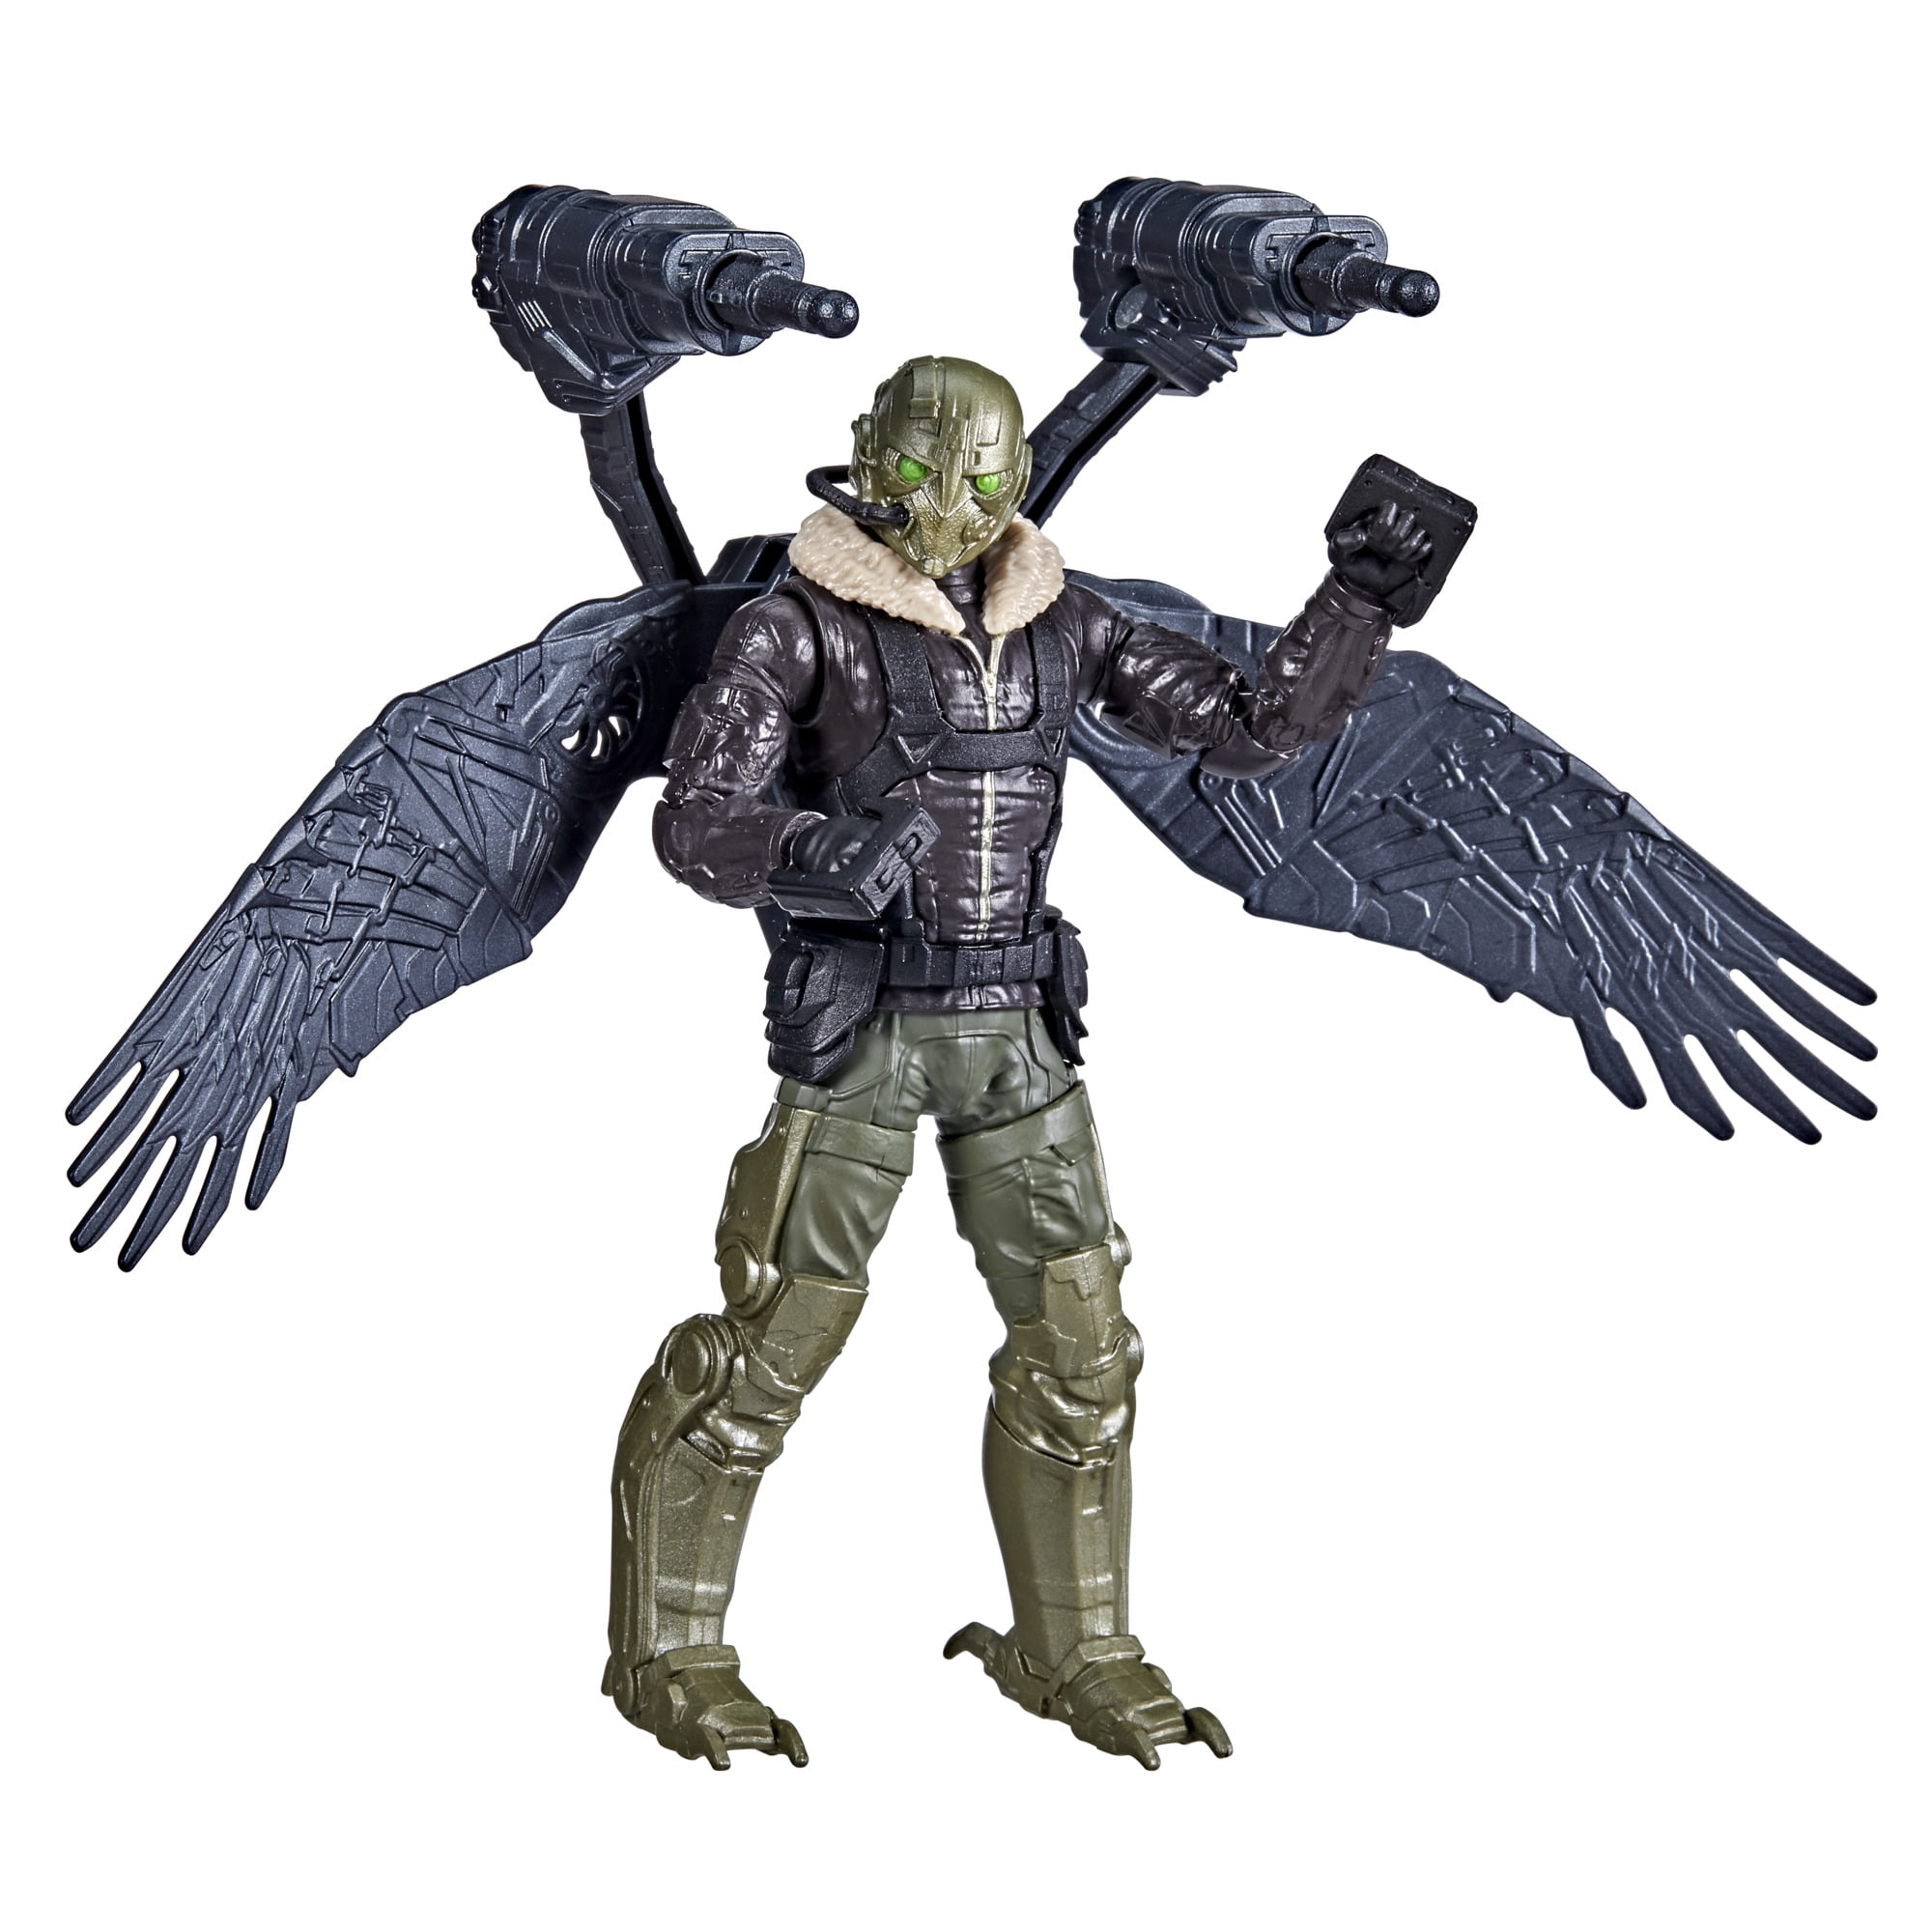 Details about   Playskool Heroes Vulture Marvel From SpiderMan Figure Playset Figure 